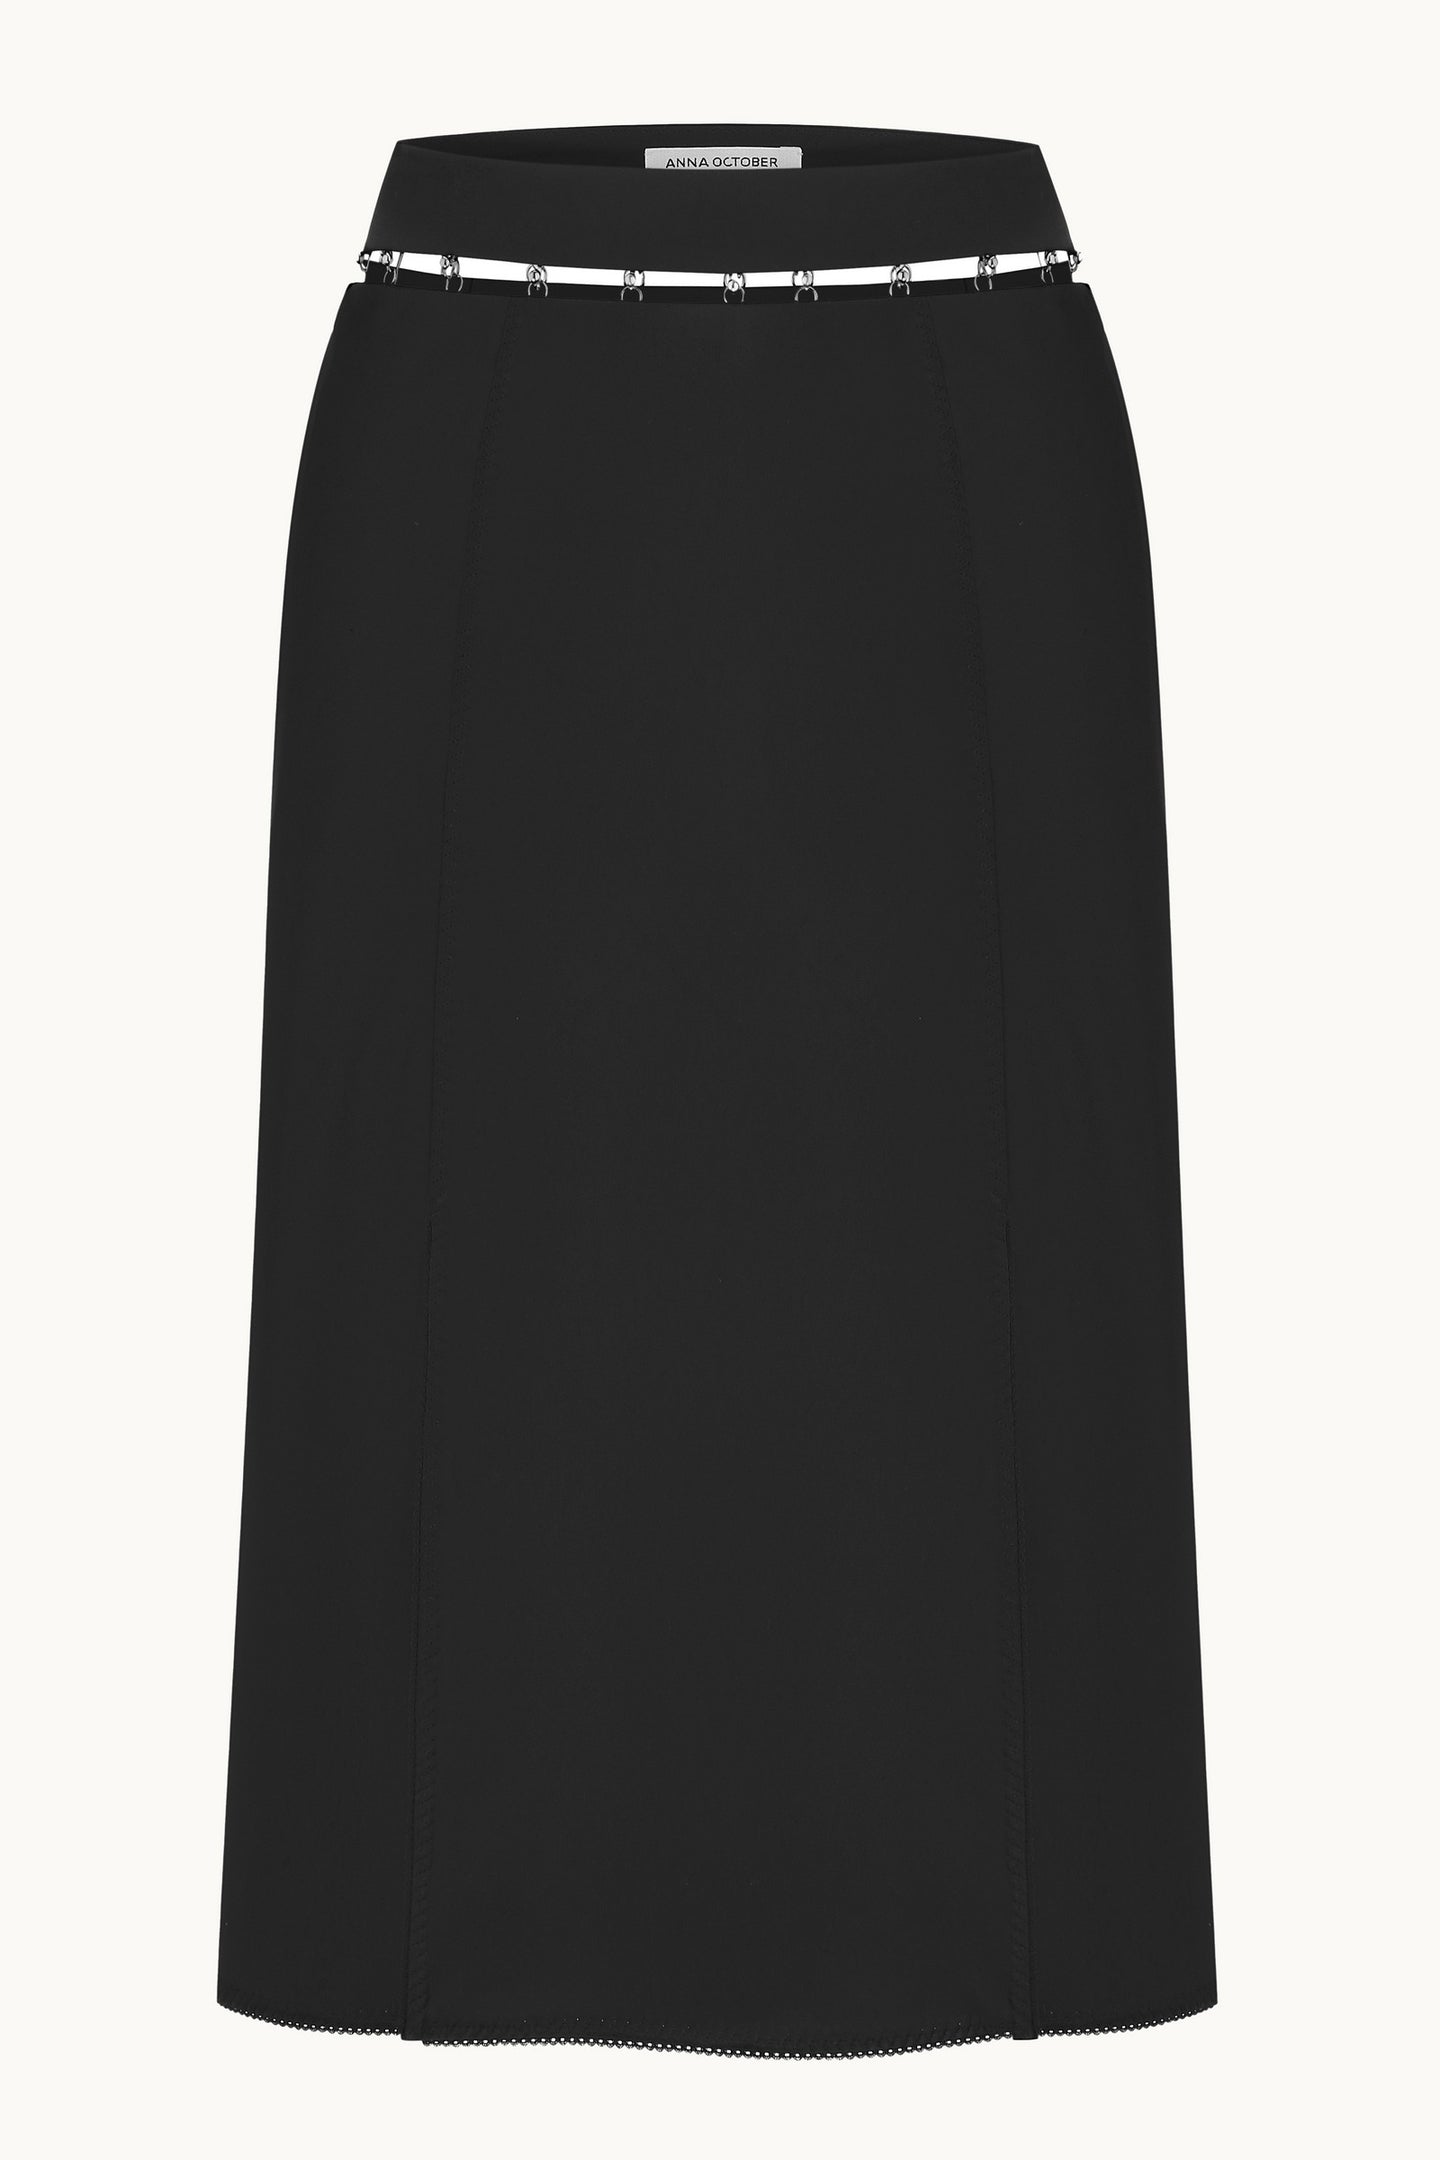 Yuna black skirt front view